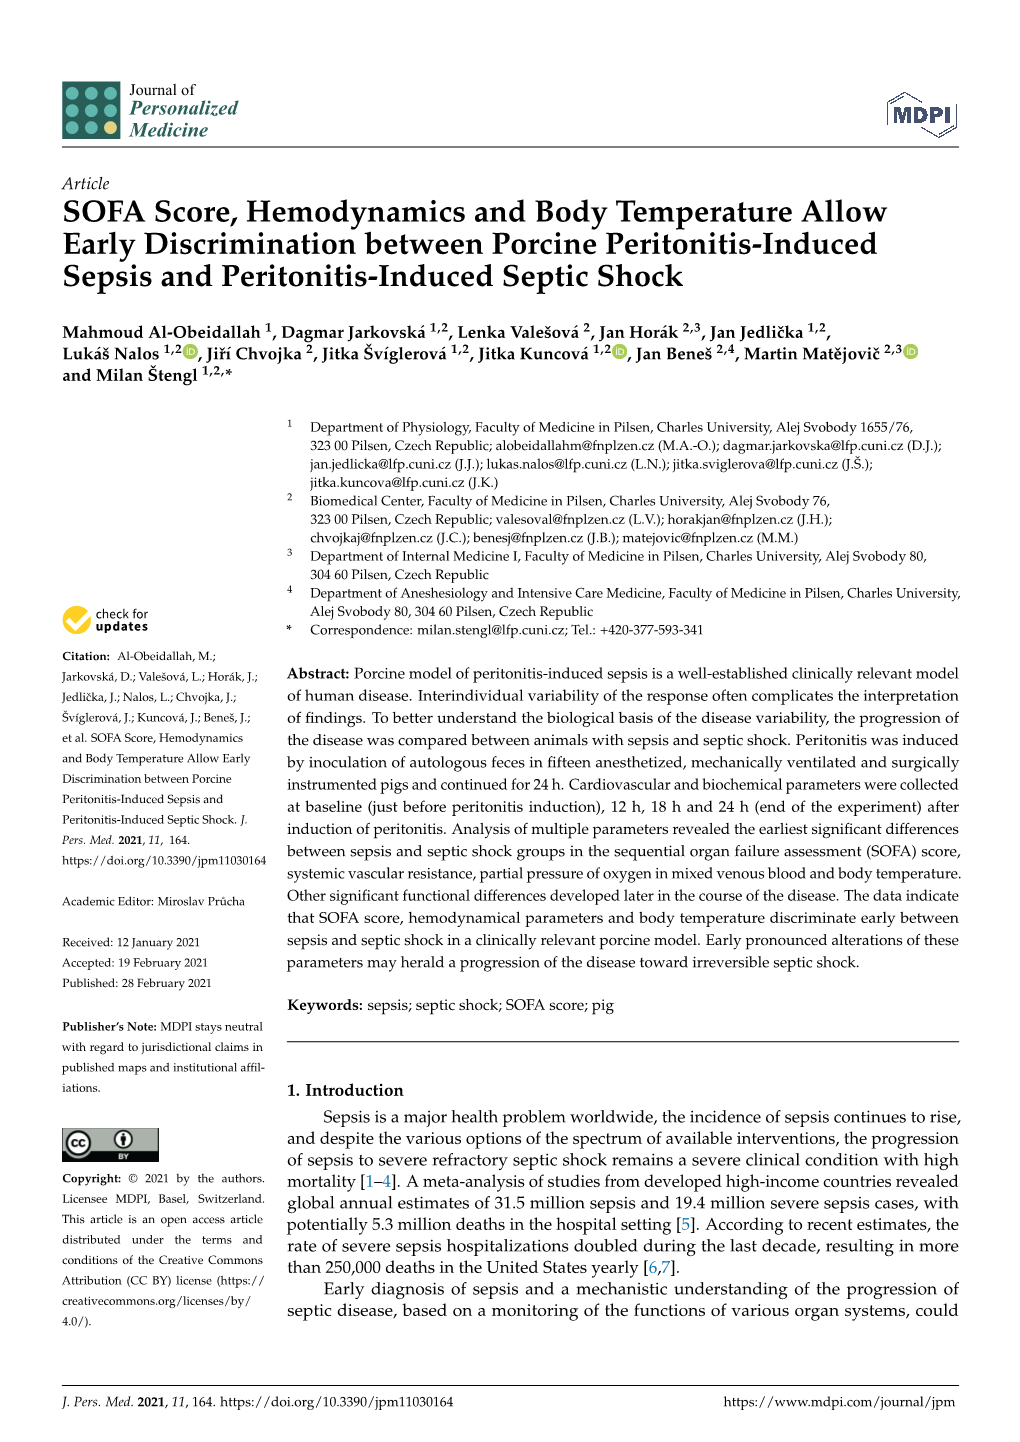 SOFA Score, Hemodynamics and Body Temperature Allow Early Discrimination Between Porcine Peritonitis-Induced Sepsis and Peritonitis-Induced Septic Shock